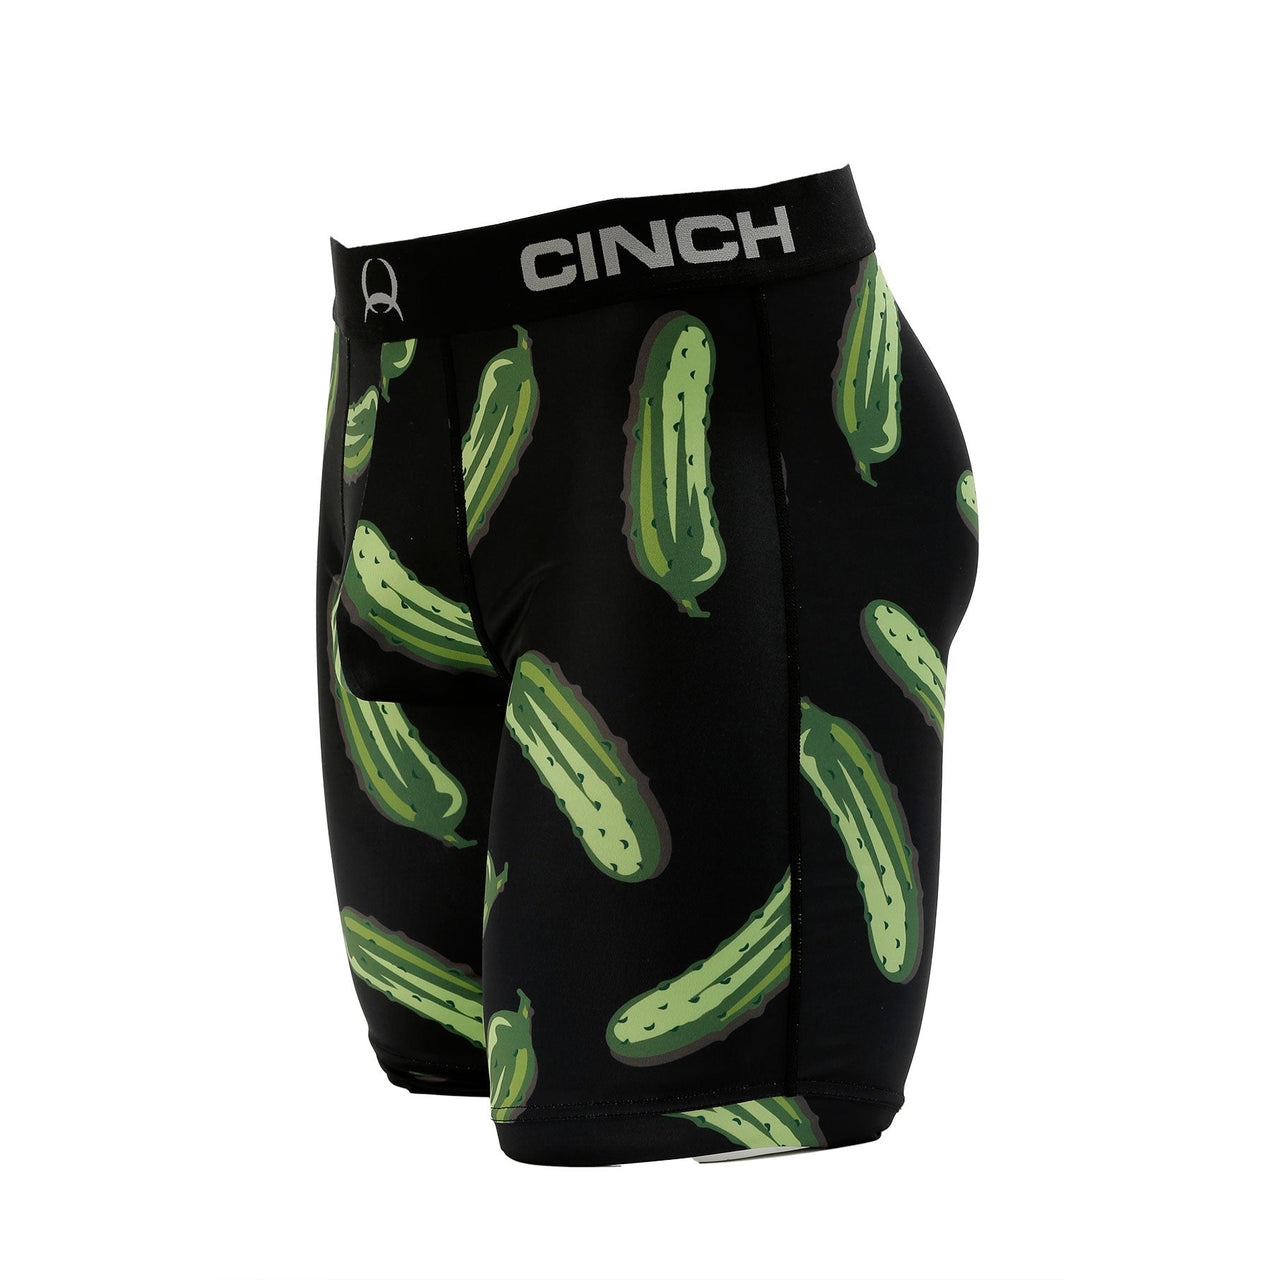 Cinch Men's 9" Pickle Boxer Brief - Black